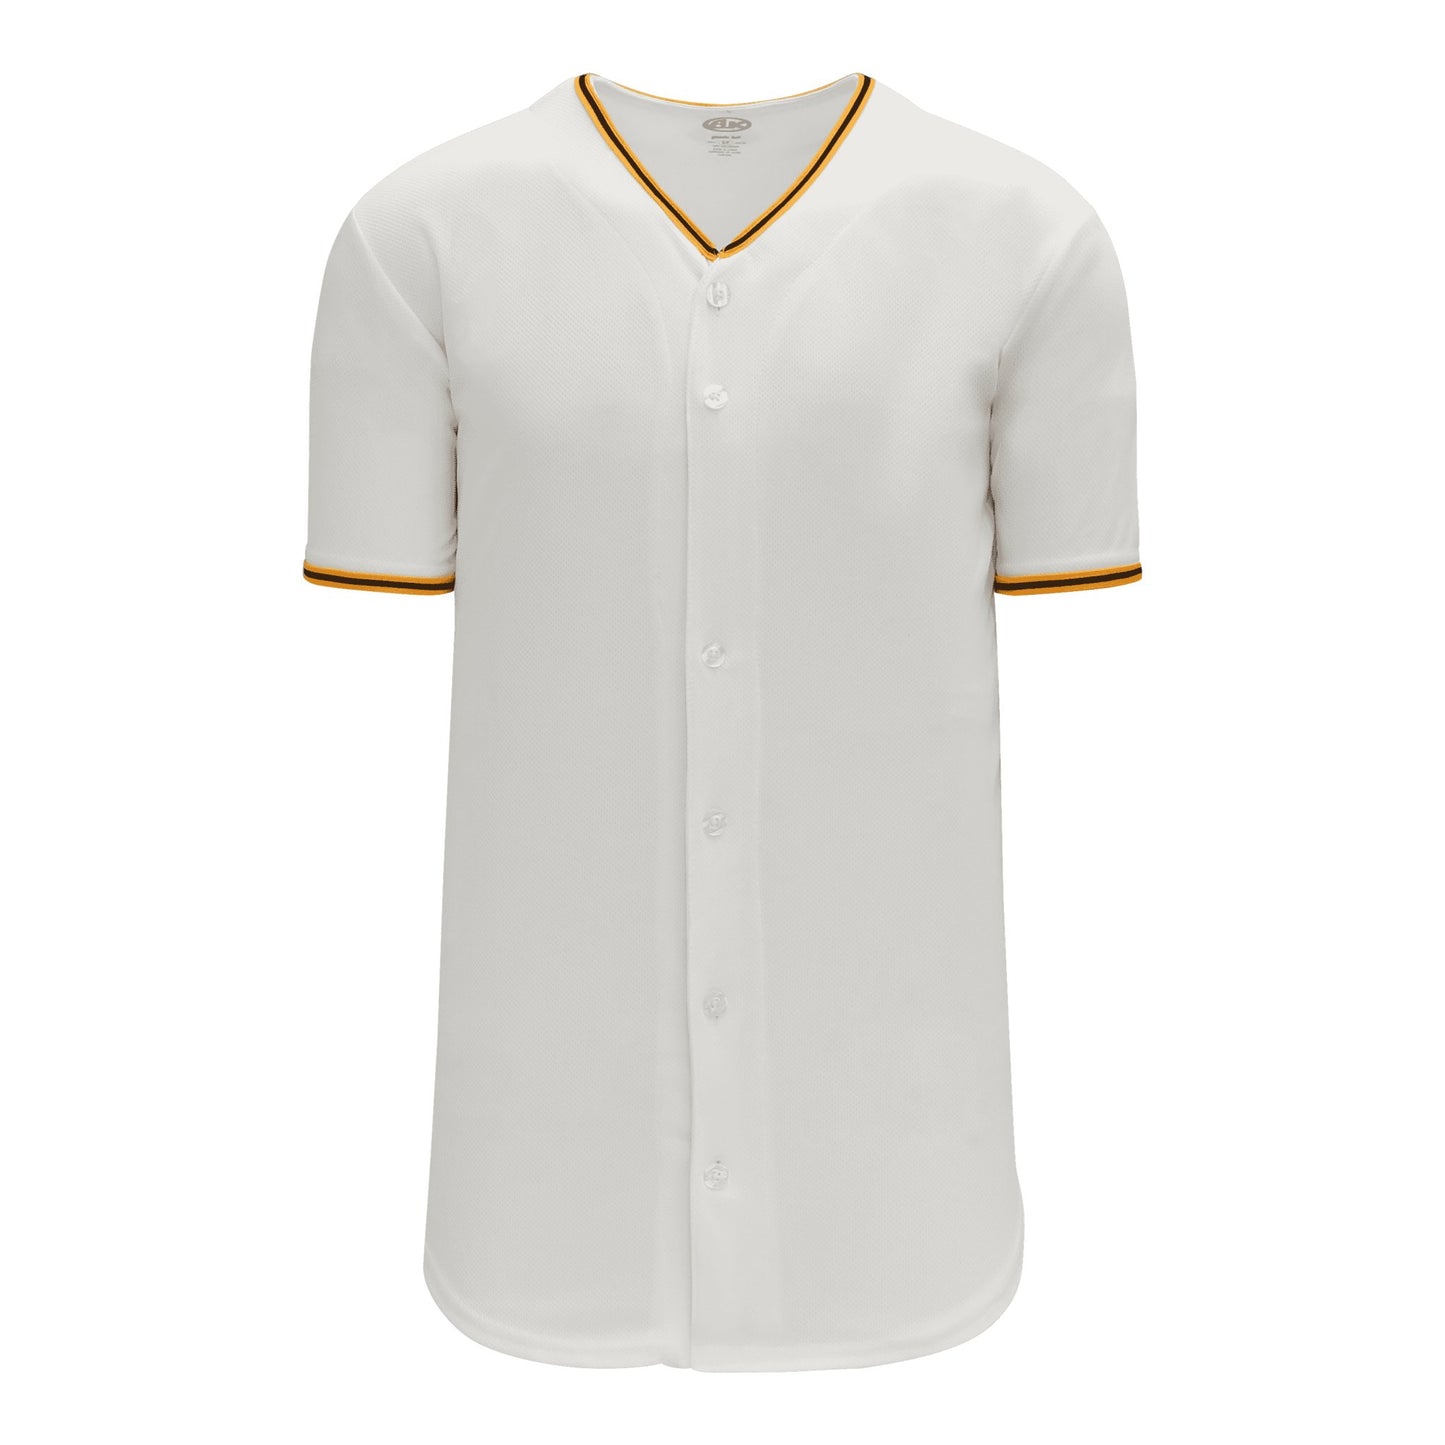 Full Button Baseball Jerseys: Pro Team Patterns, Adult Cut